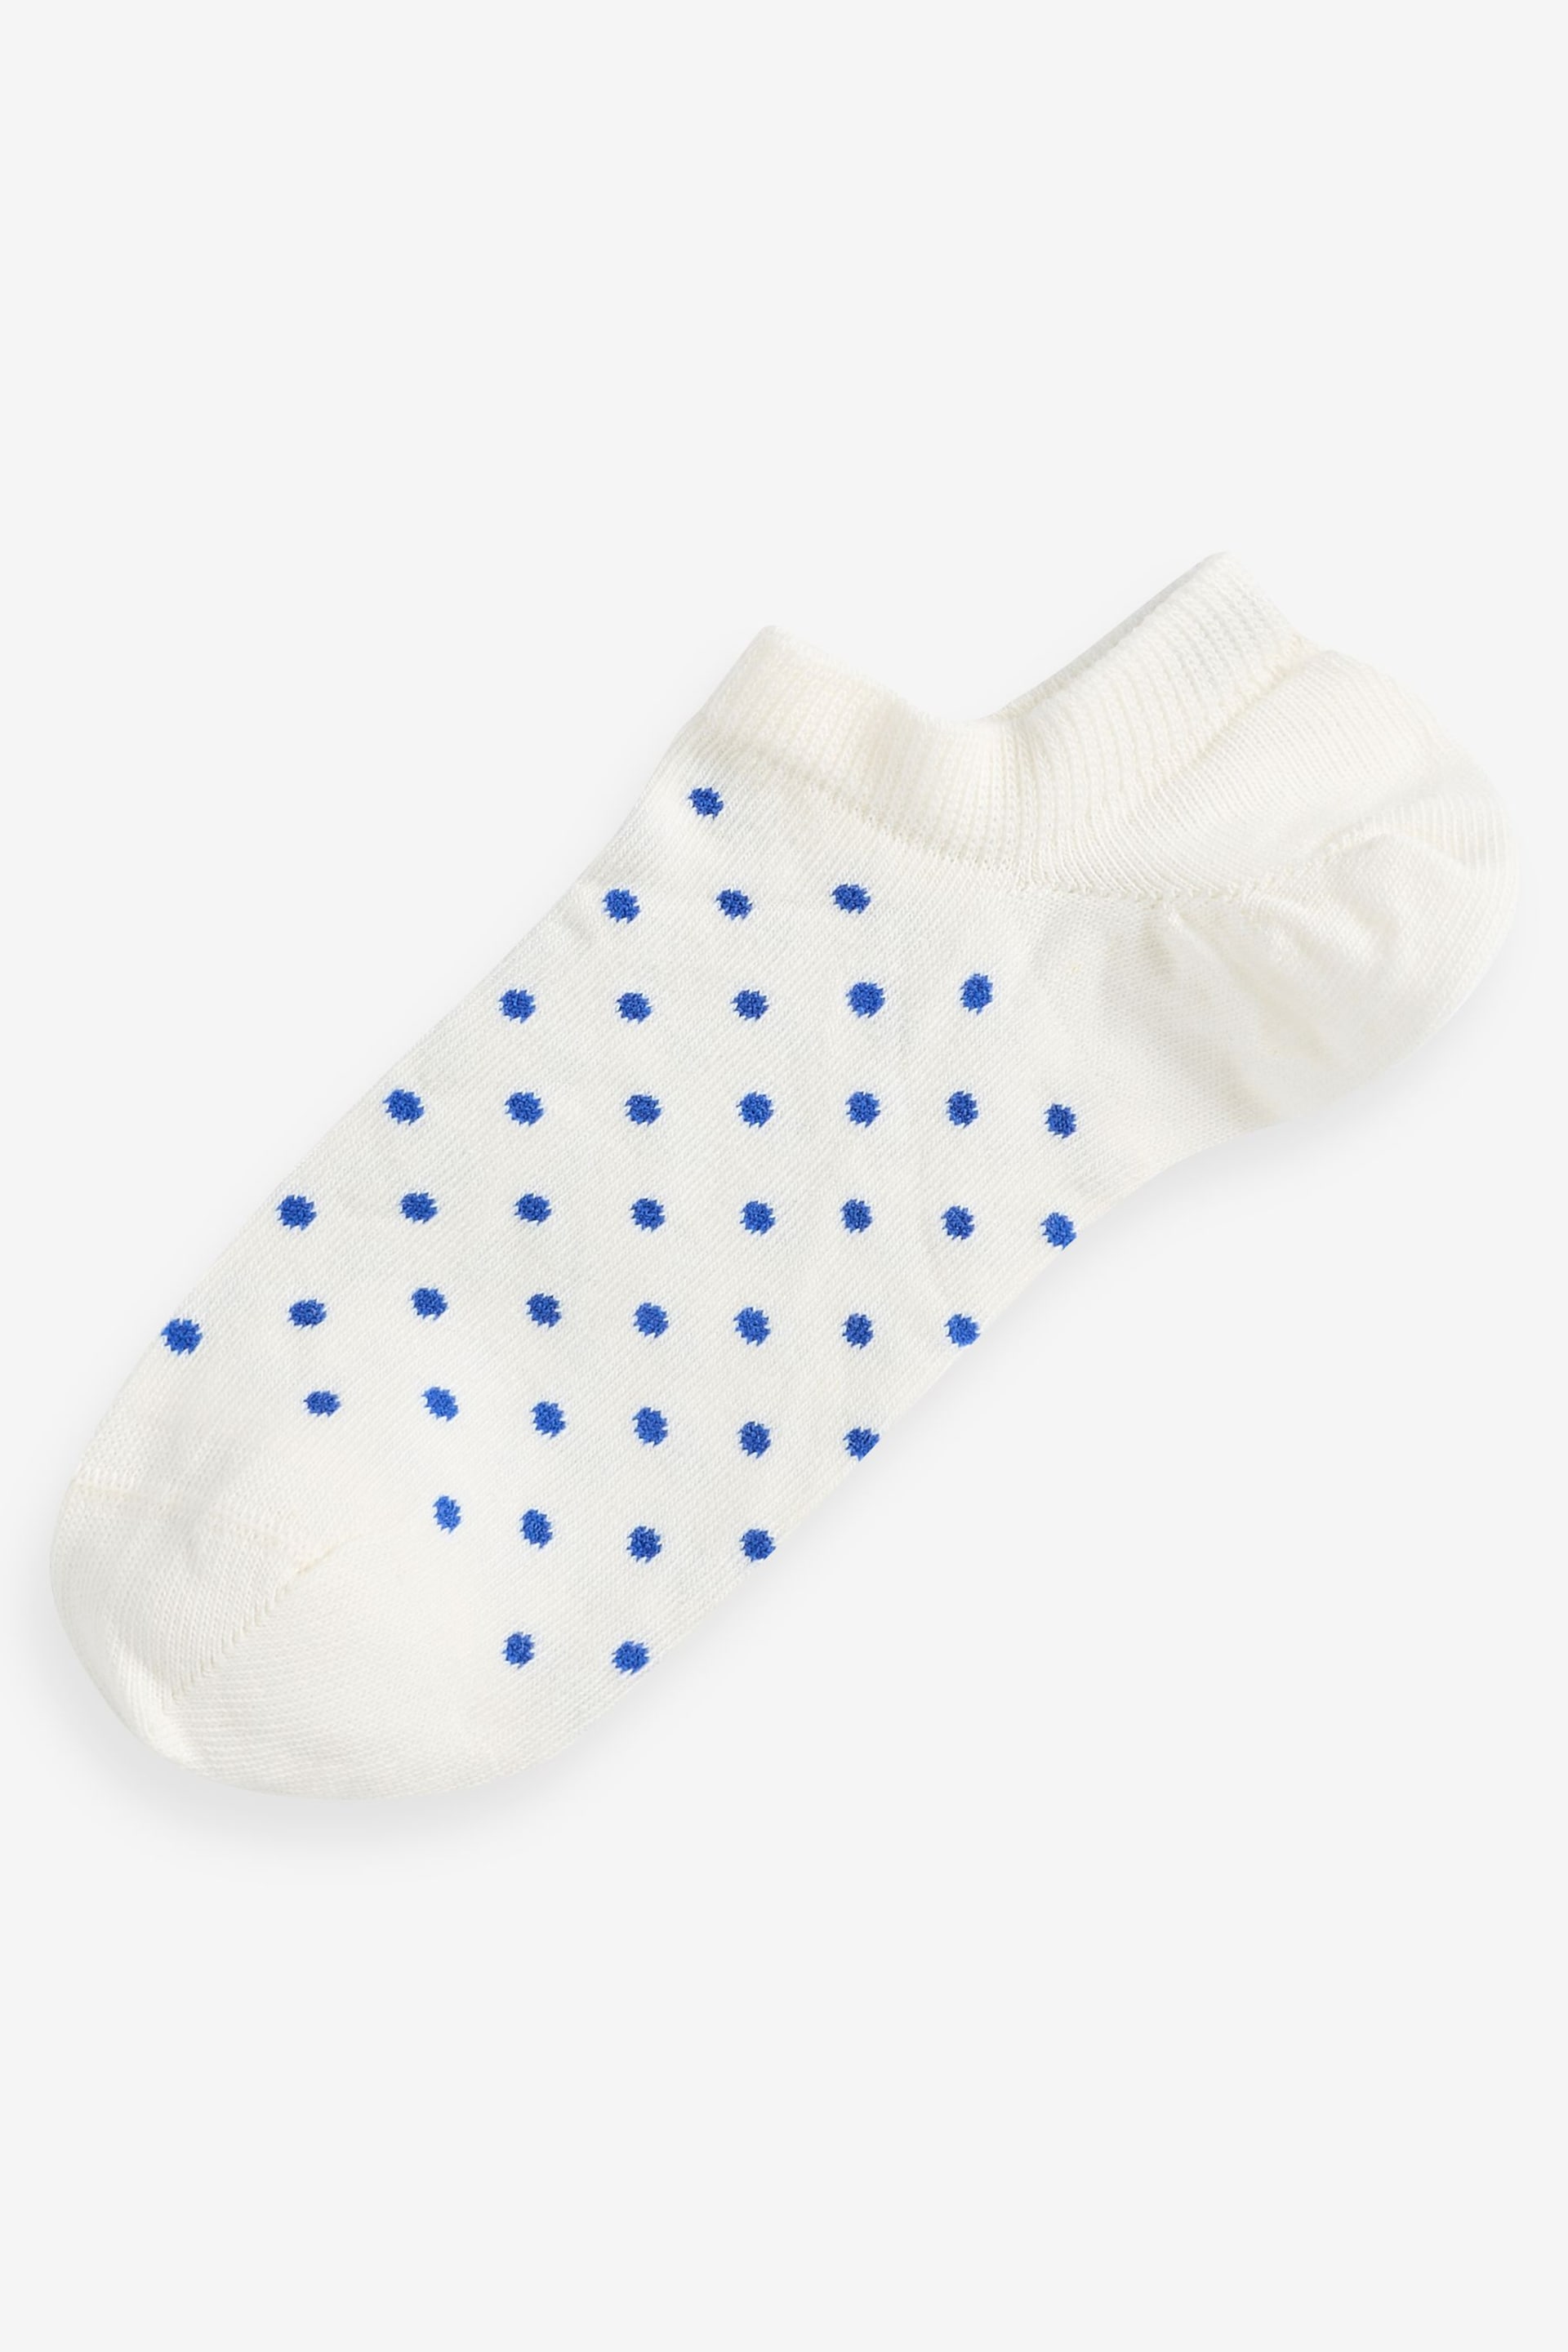 White/Blue Floral Trainer Socks 5 Pack - Image 3 of 6